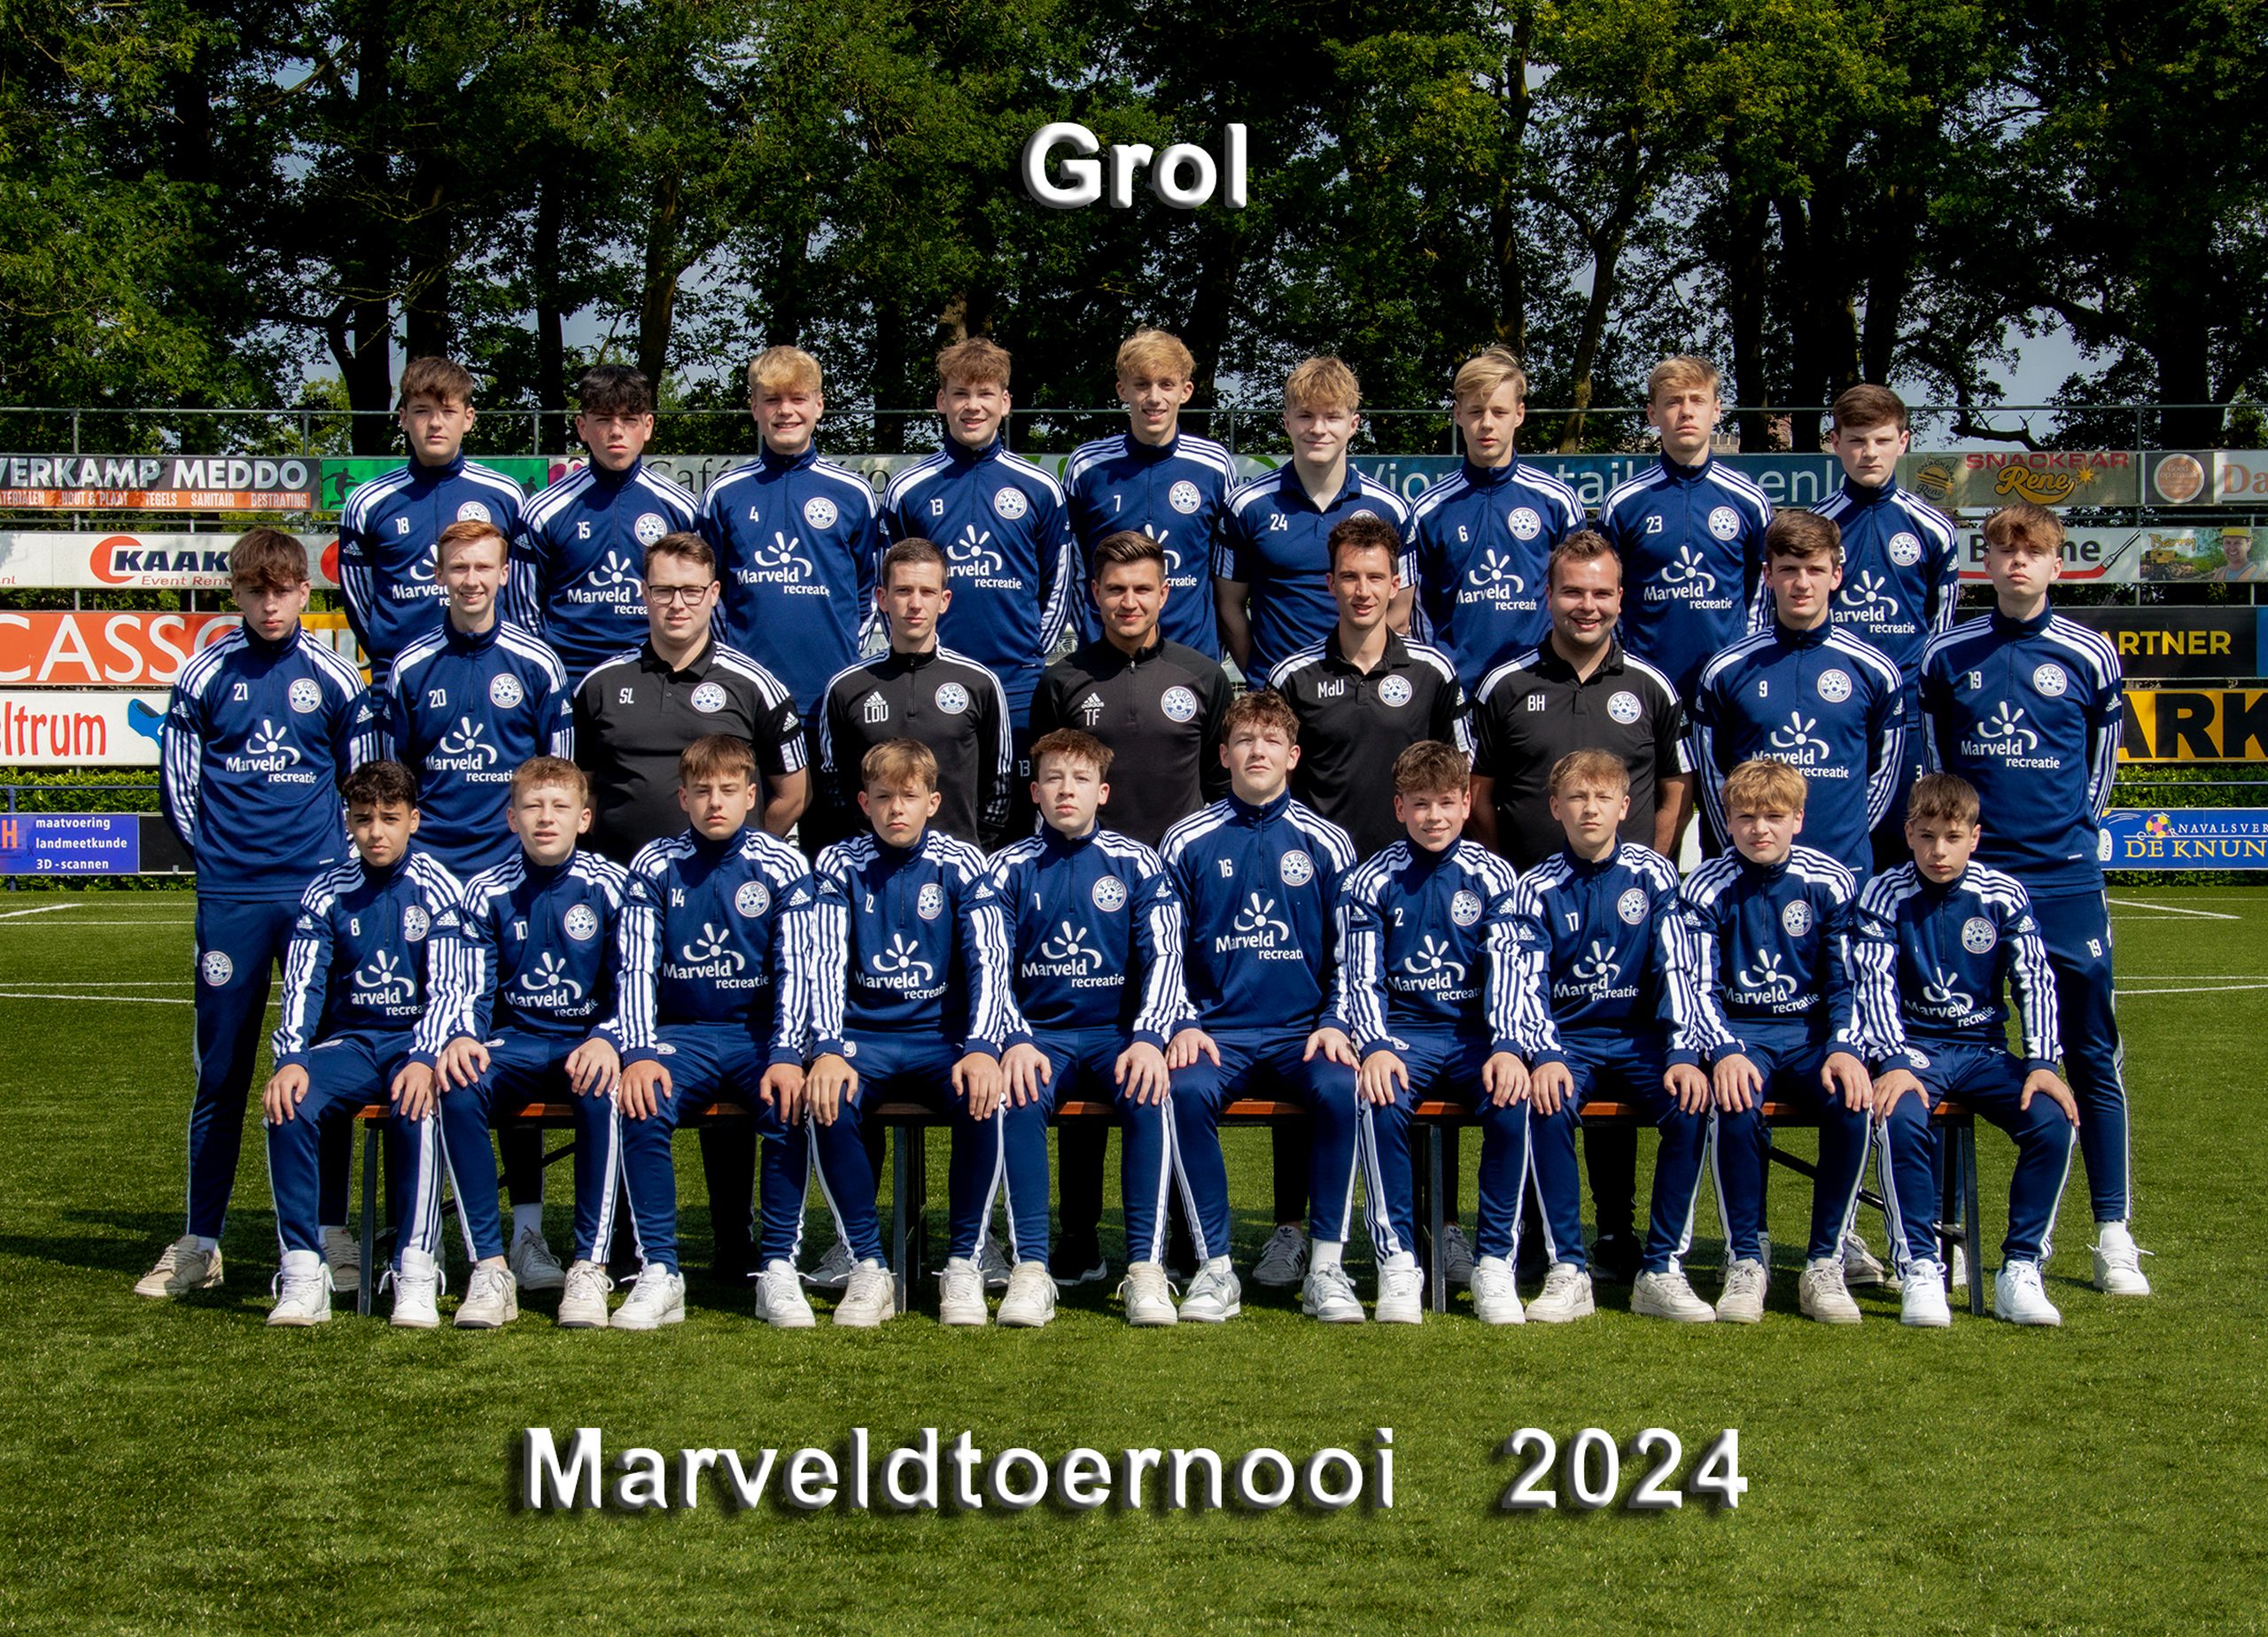 Marveld Tournament 2024 - Team Grol